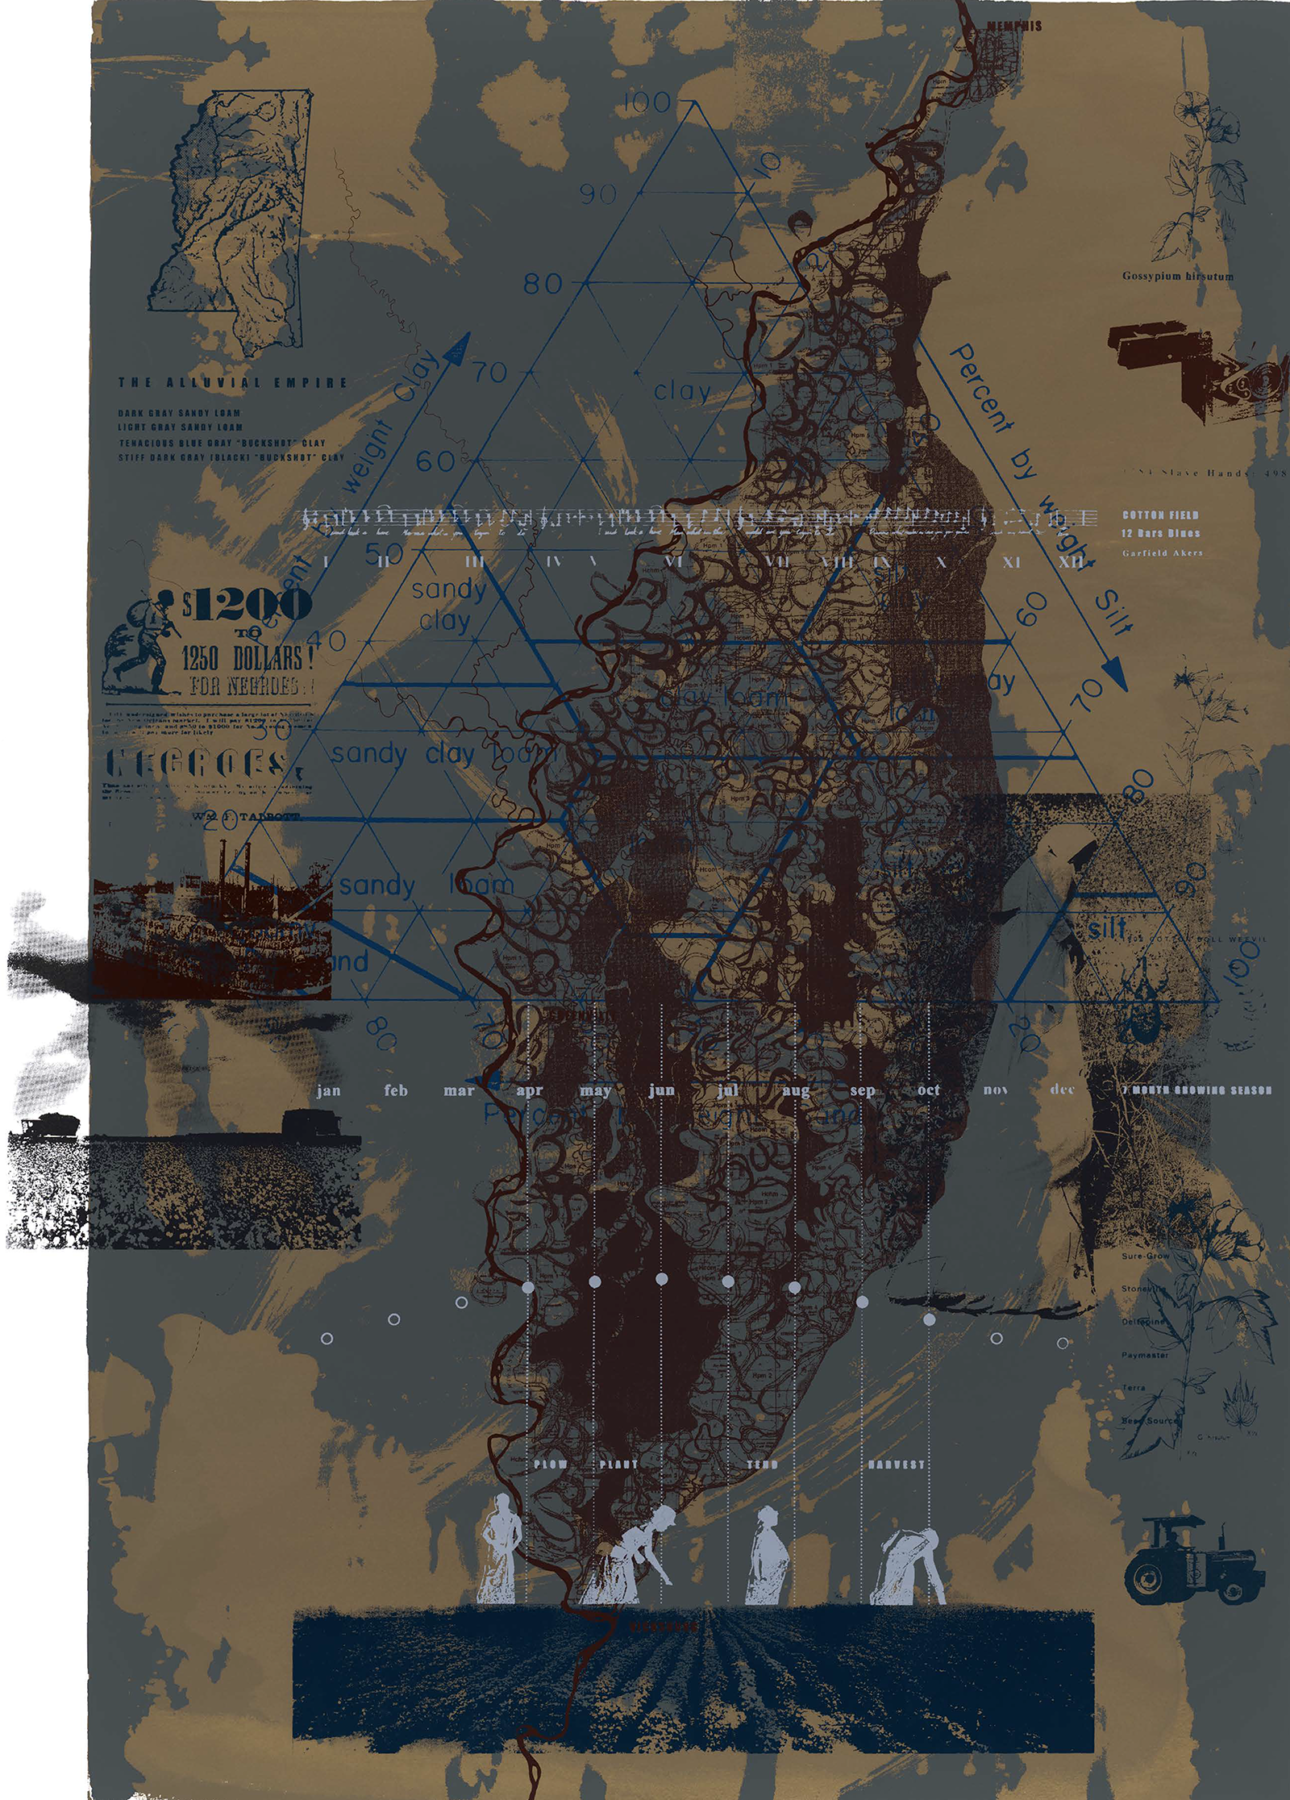 Archisearch Αρχιτεκτονικές Αφηγήσεις στην Ανθρωπόκαινο Εποχή: Η σύγχρονη οικολογική συνθήκη ως σχεδιαστική πρακτική. | Ερευνητική Εργασία από τον Ευάγγελο Κατσανεβάκη